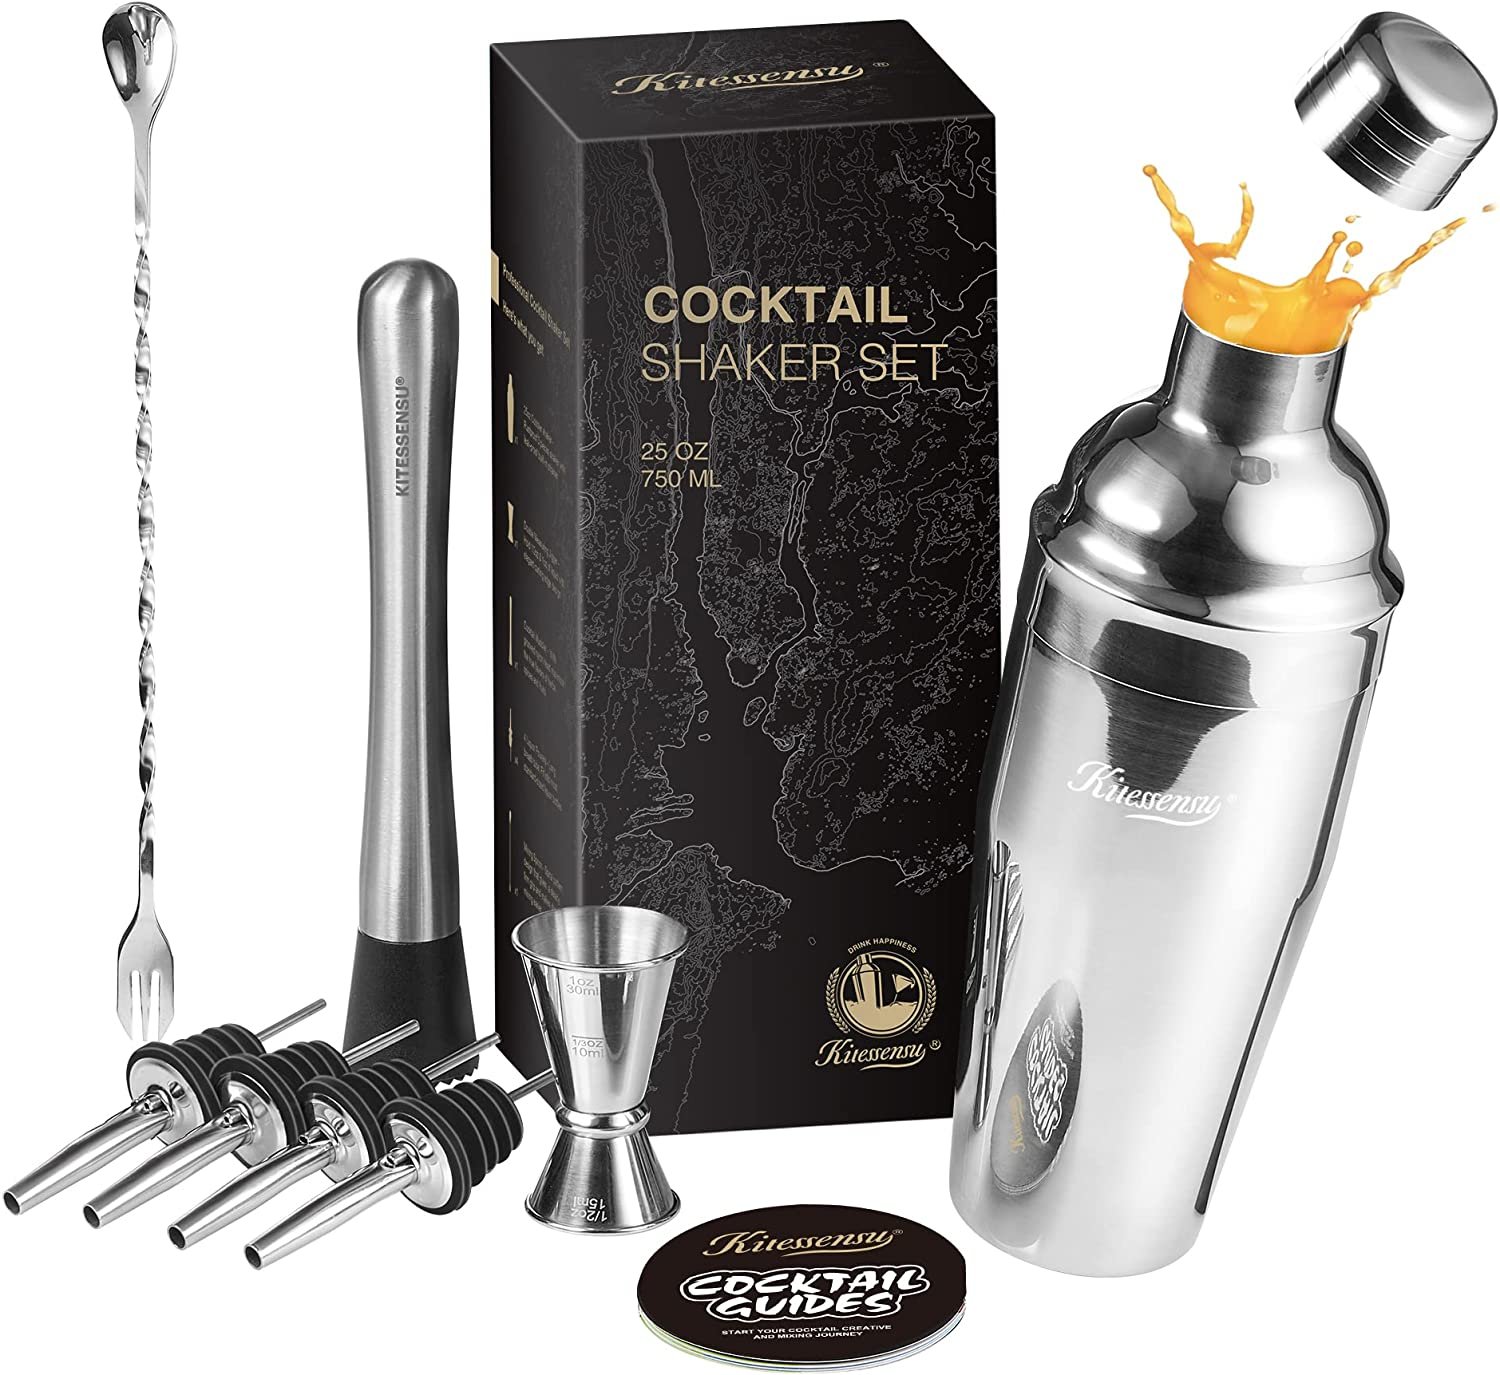  Cocktail Shaker Set | KITESSENSU Drink Mixer 